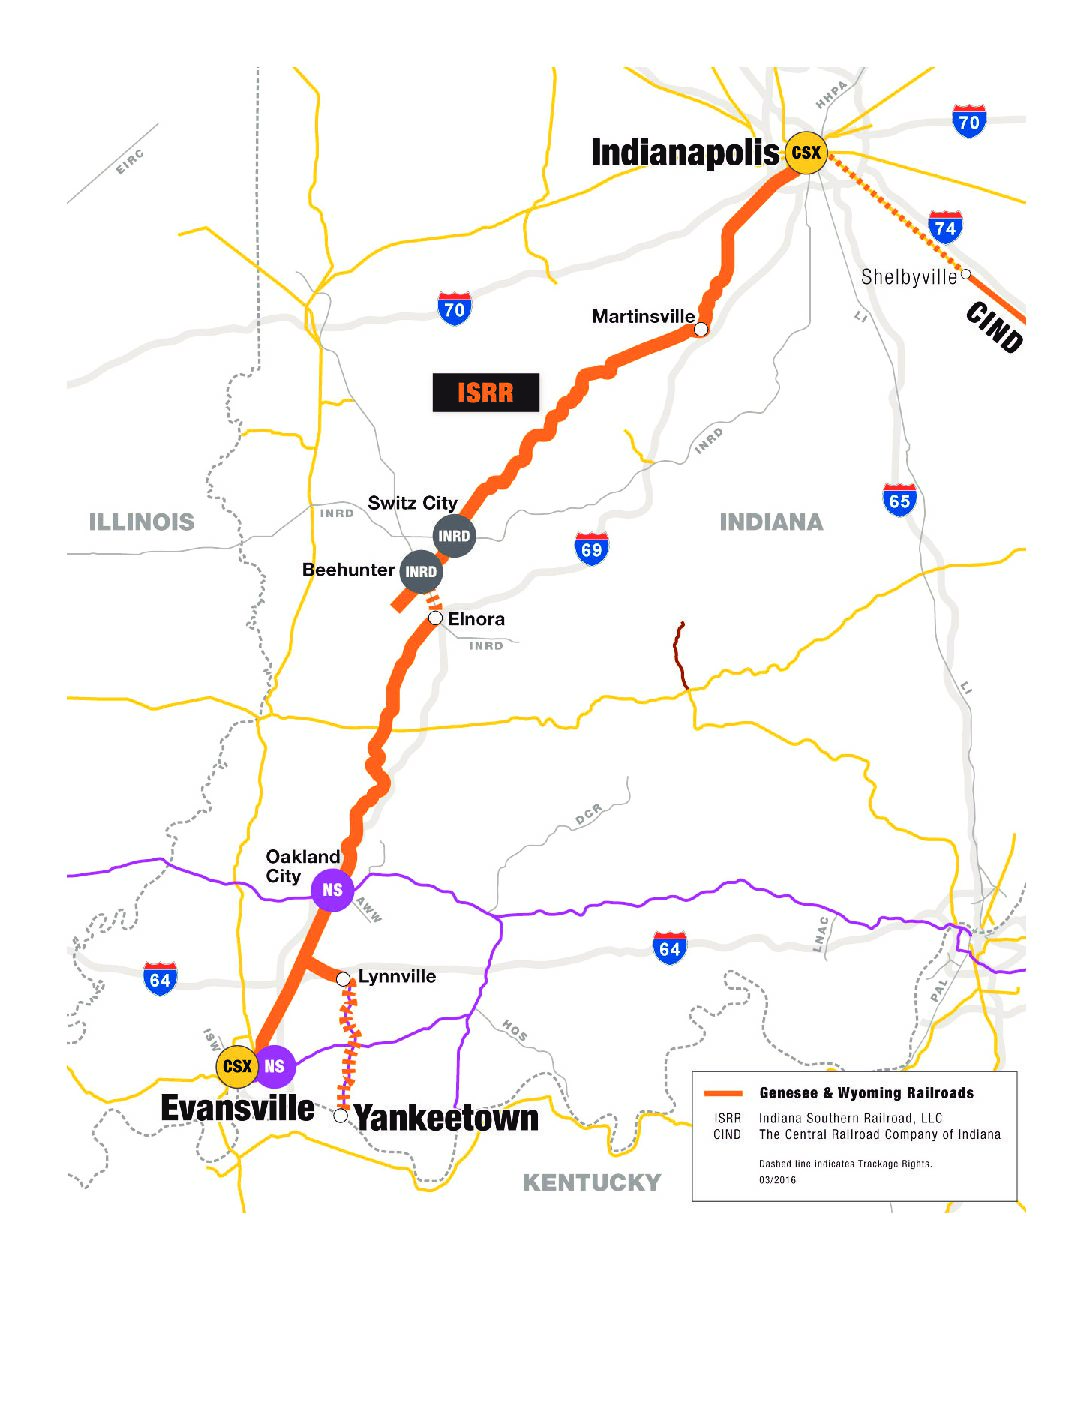 Indiana Railroad Map 2019 Indiana Southern Railroad – A Genesee & Wyoming Company